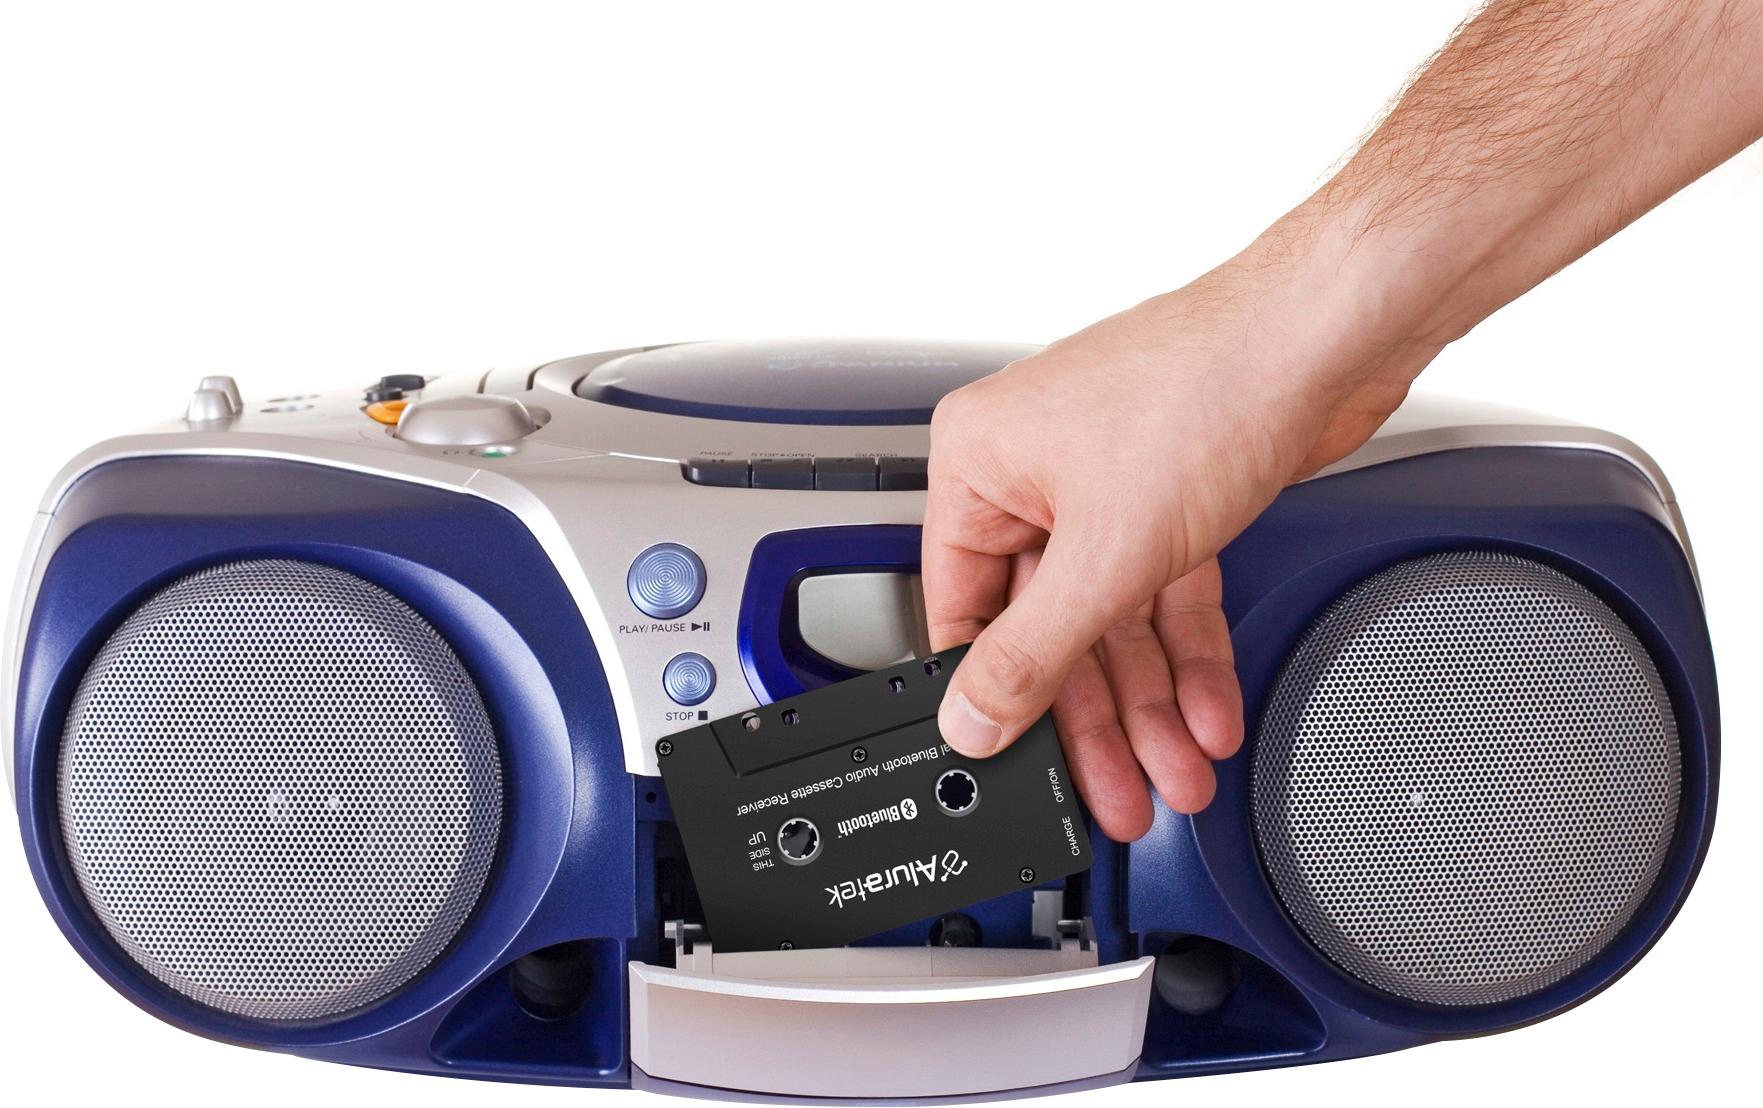 ION Audio Bluetooth Cassette Adapter Black 61194676000 - Best Buy